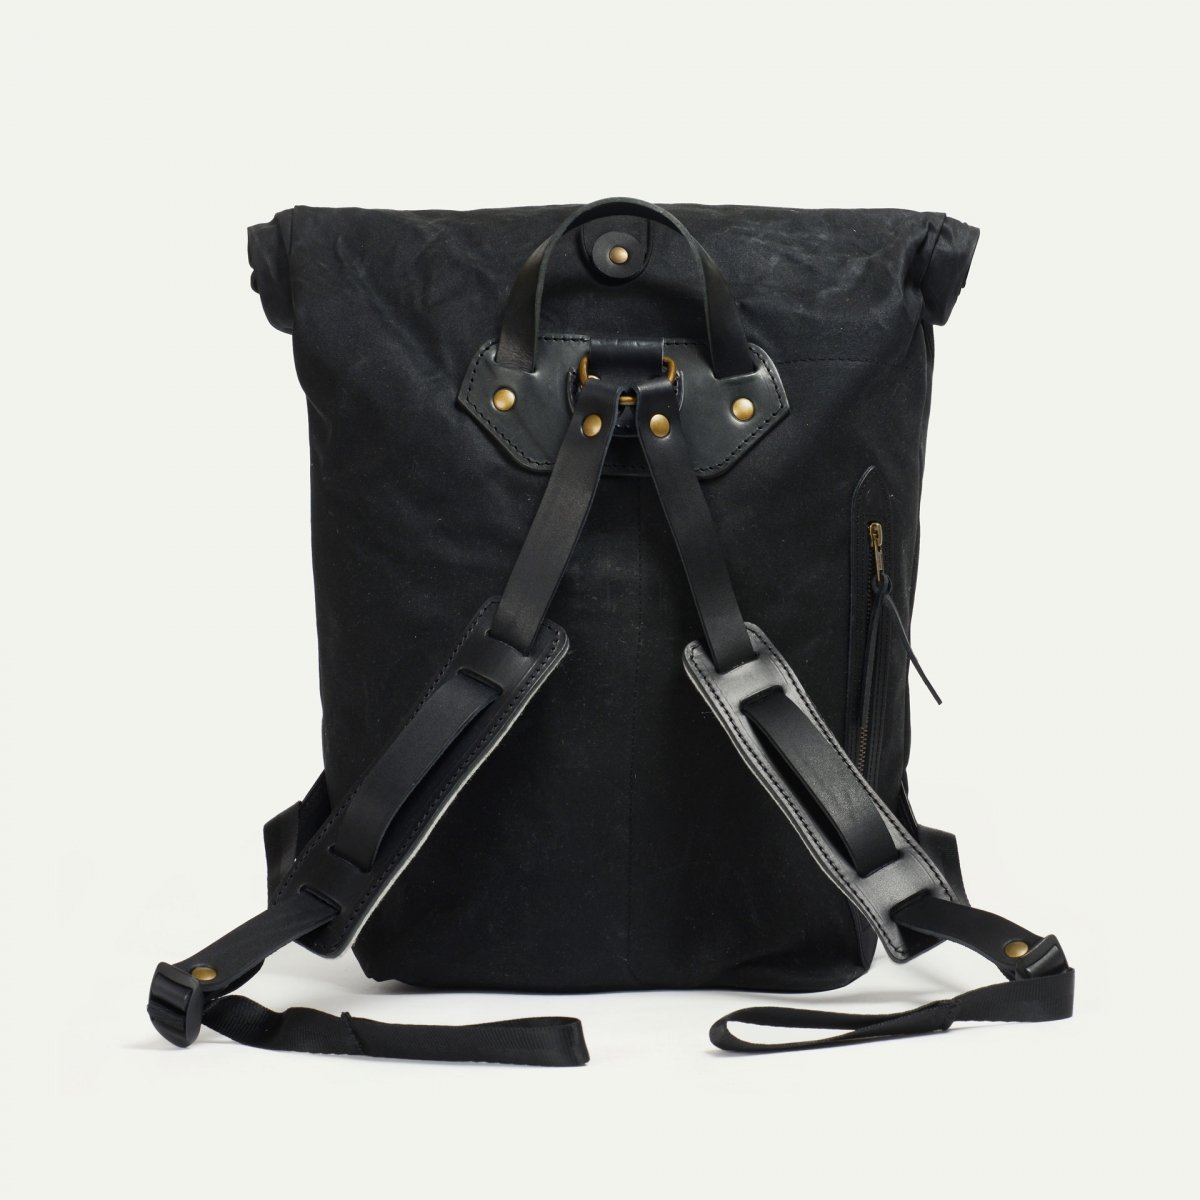 Météore backpack - Black waxed (image n°3)